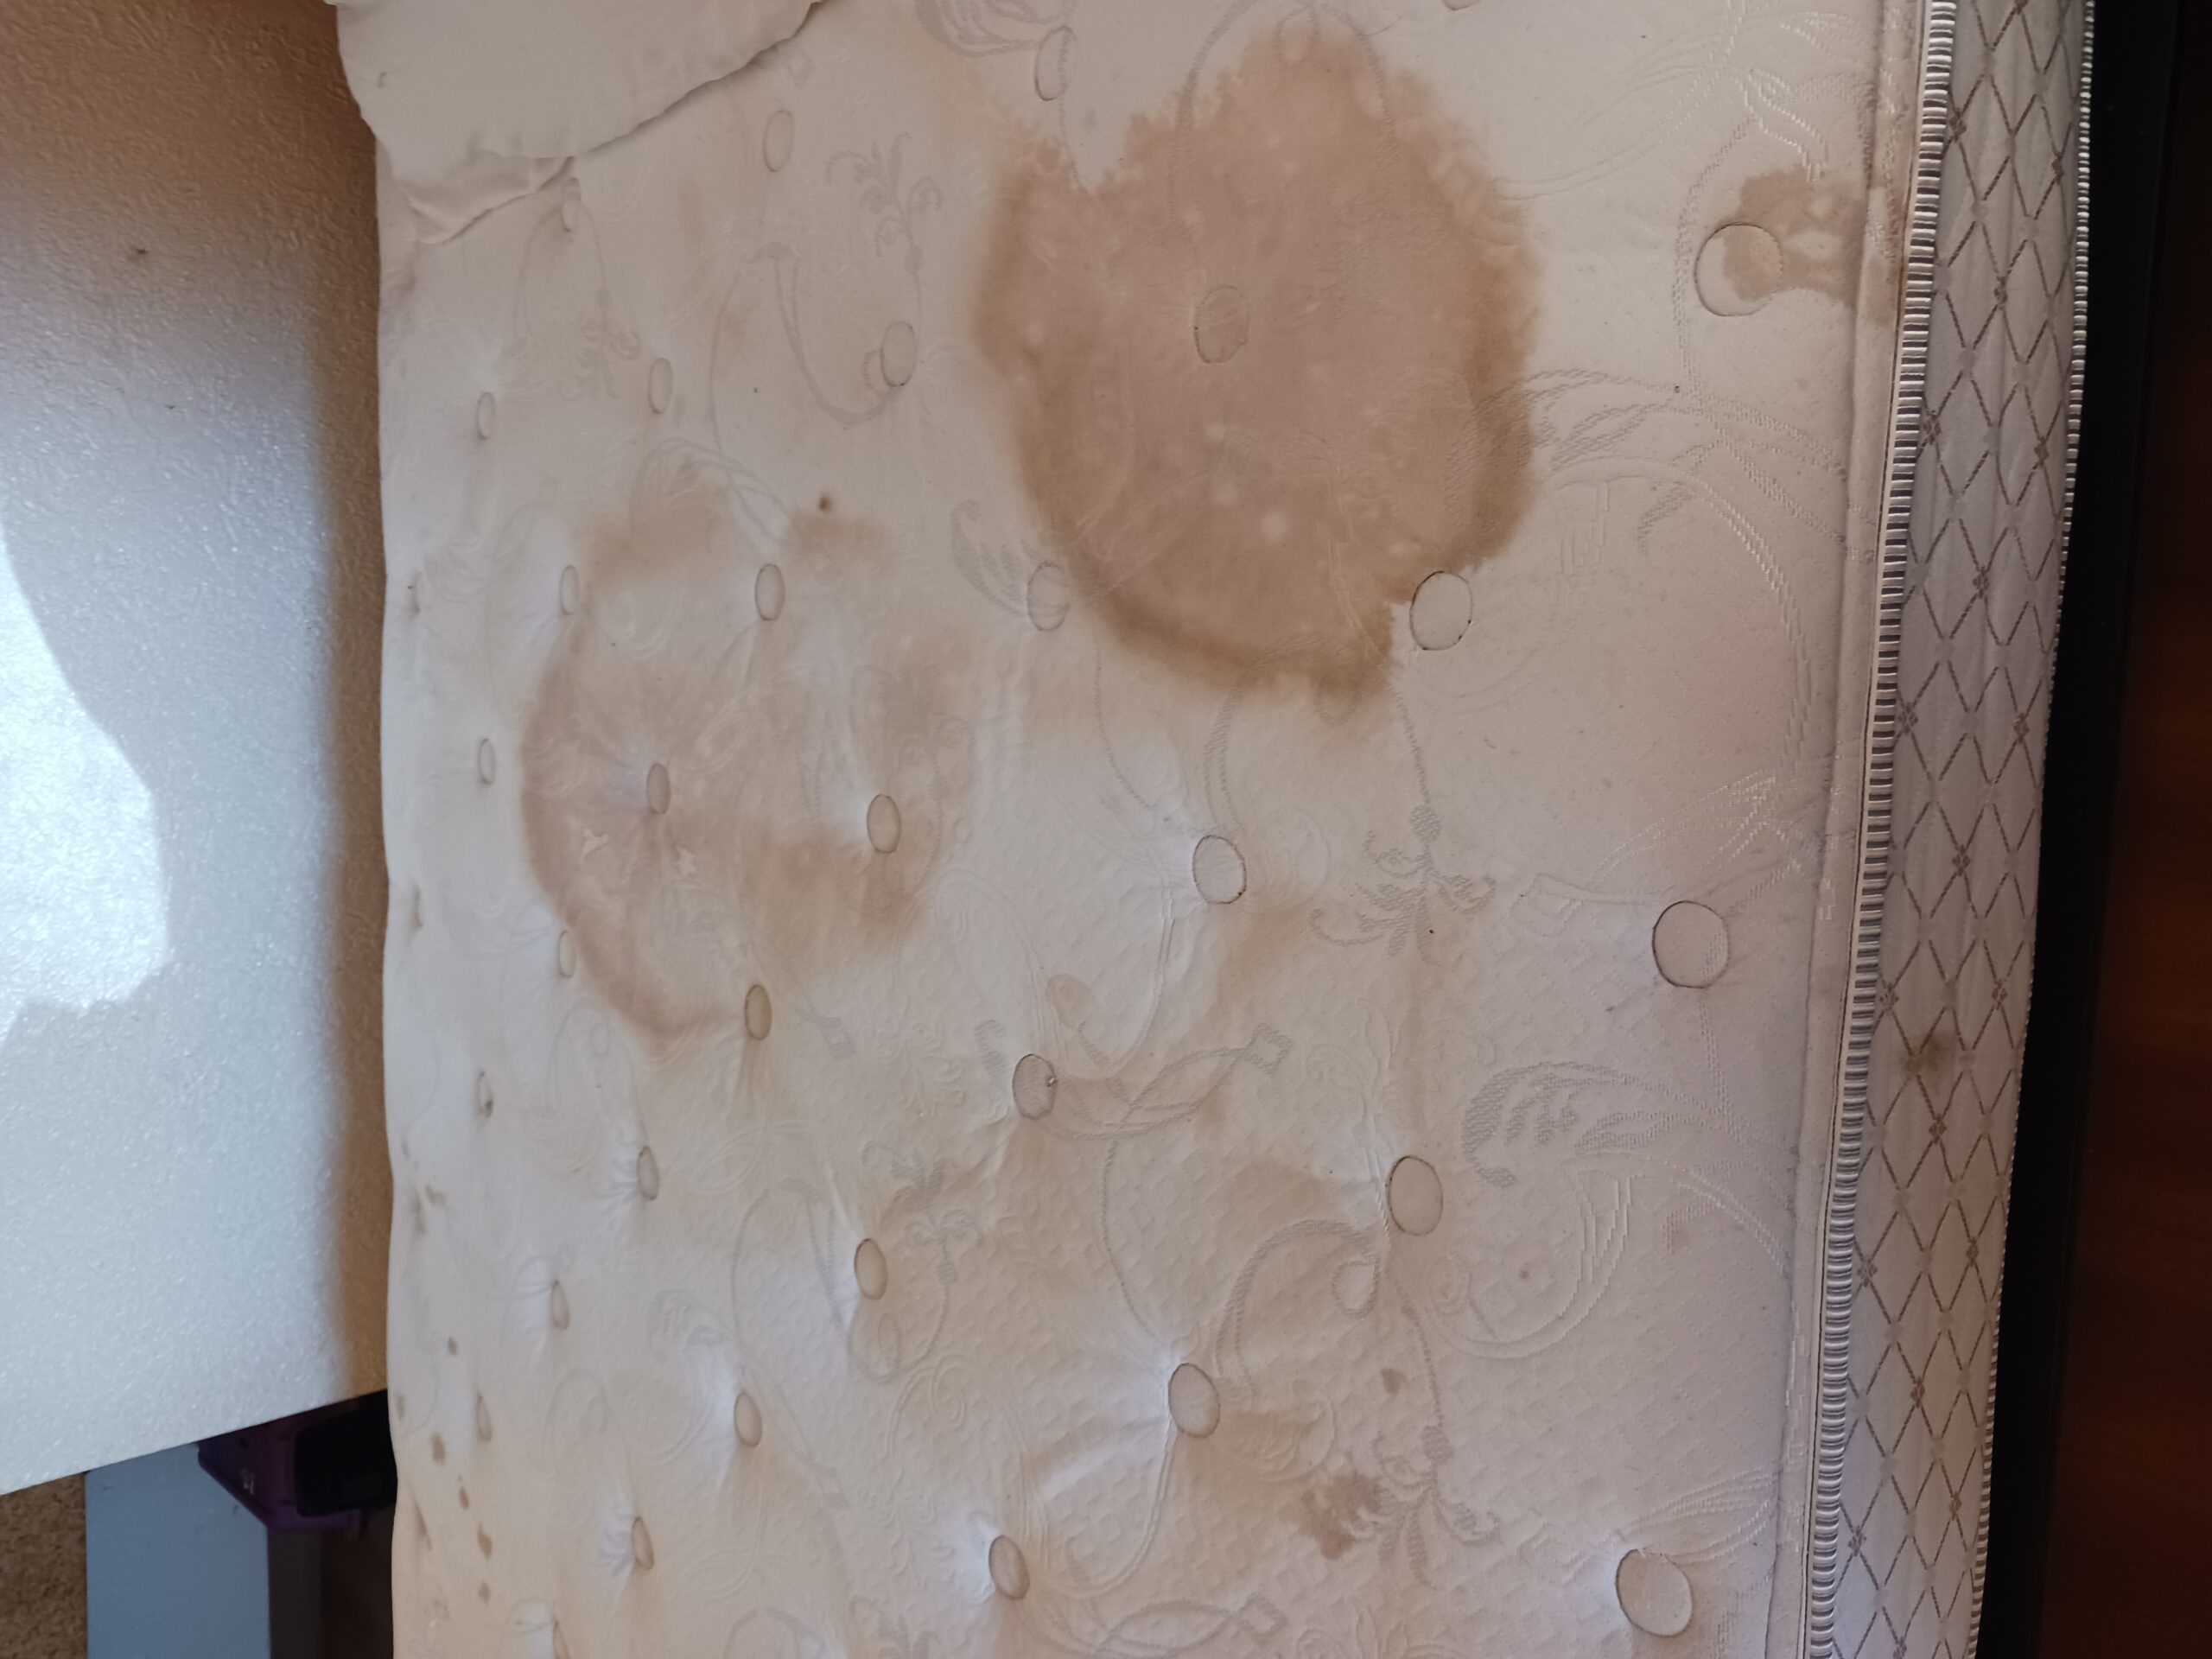 Motel 6 complaint Dirt Nasty Bed